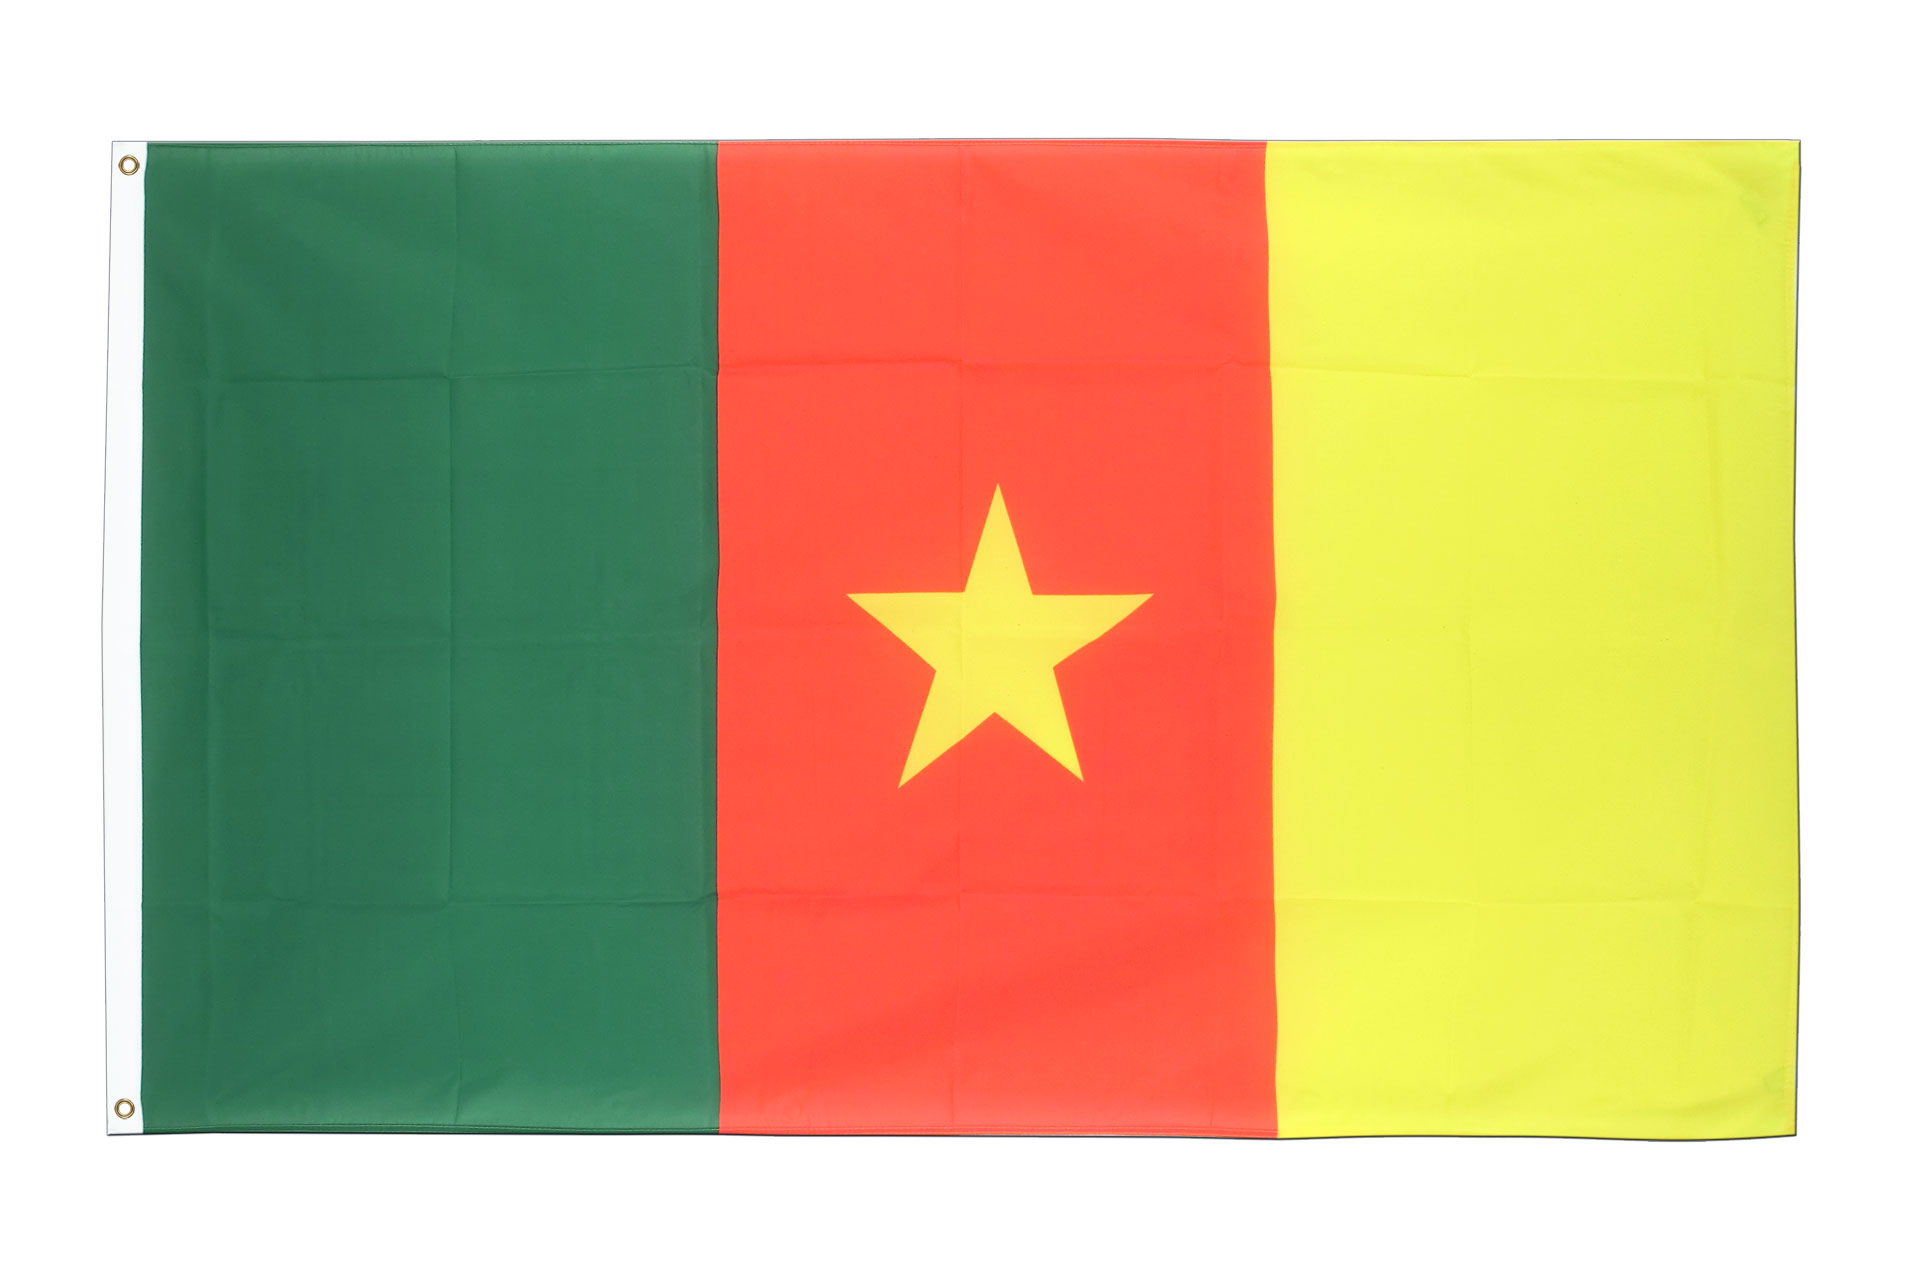 Flagge Deutsch Kamerun 60 x 90 cm Fahne 